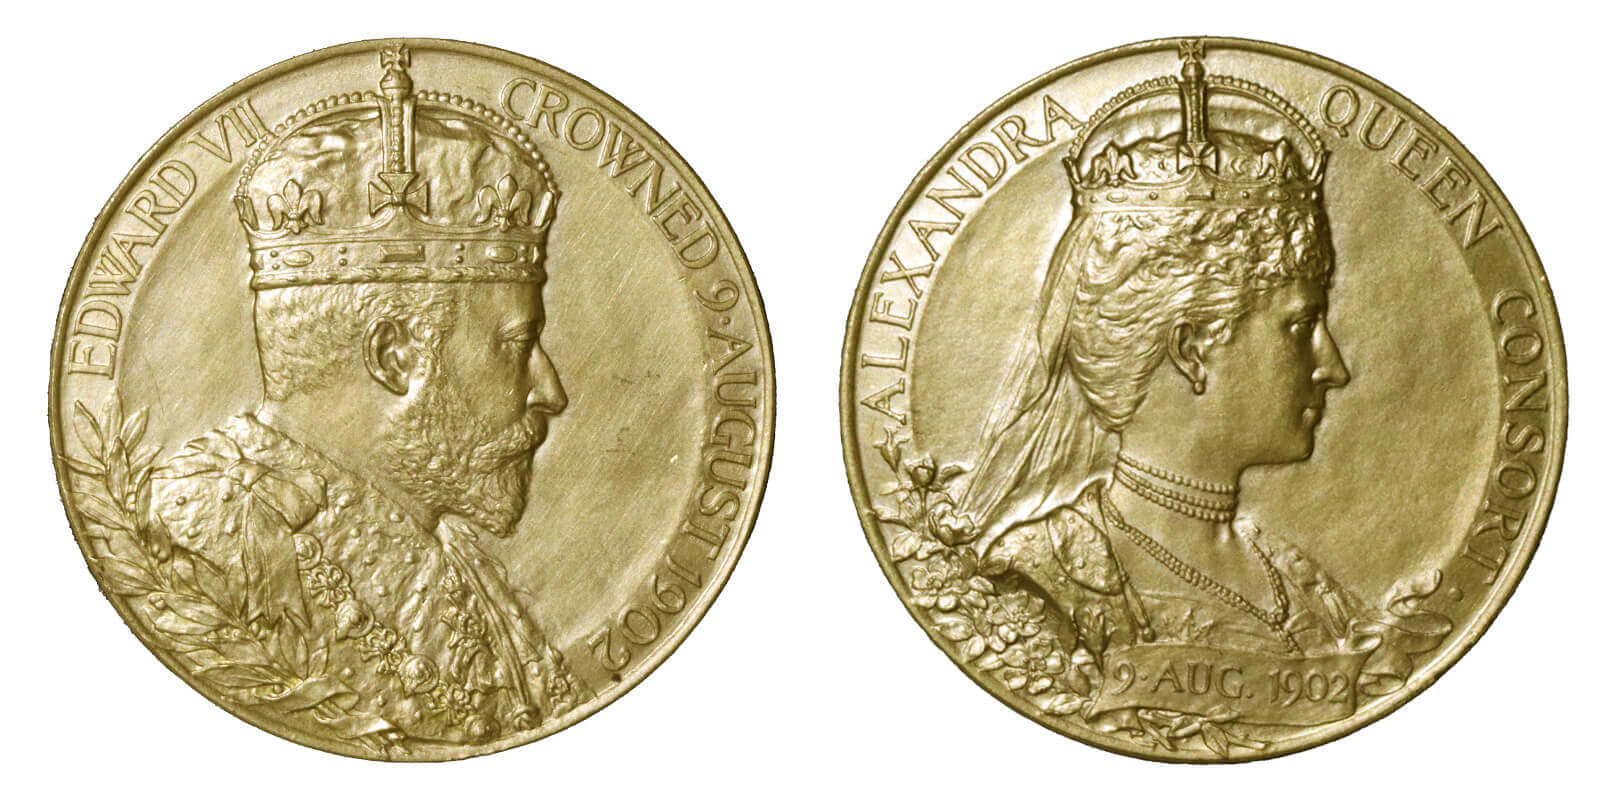 Edward VII coronation medal.jpg